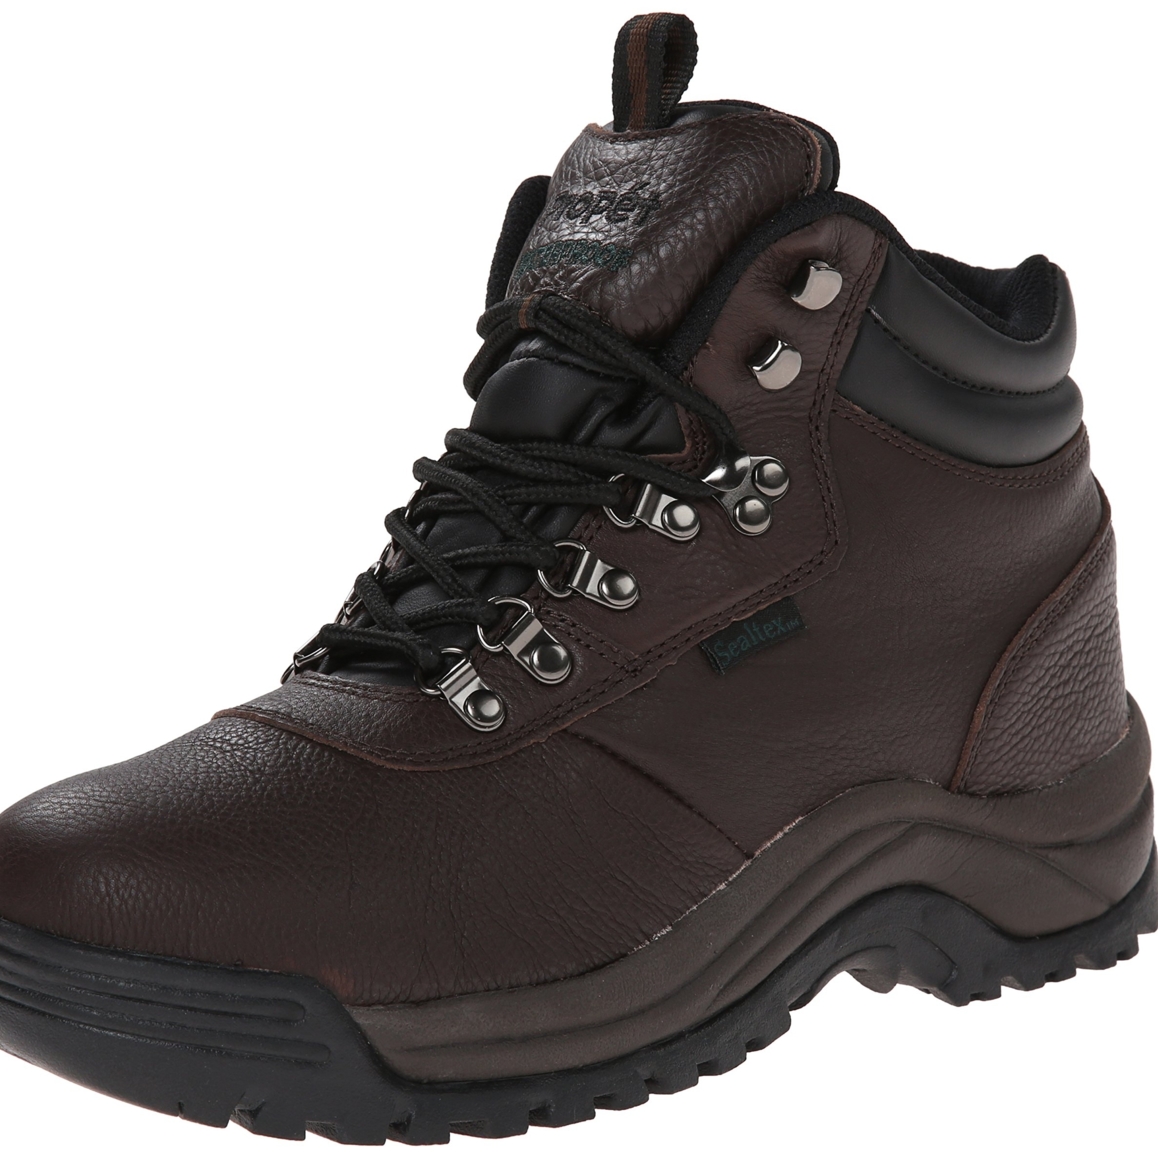 Propet Men's Cliff Walker Hiking Boot Bronco Brown - M3188BRO - BRONCO BROWN, 16-4E